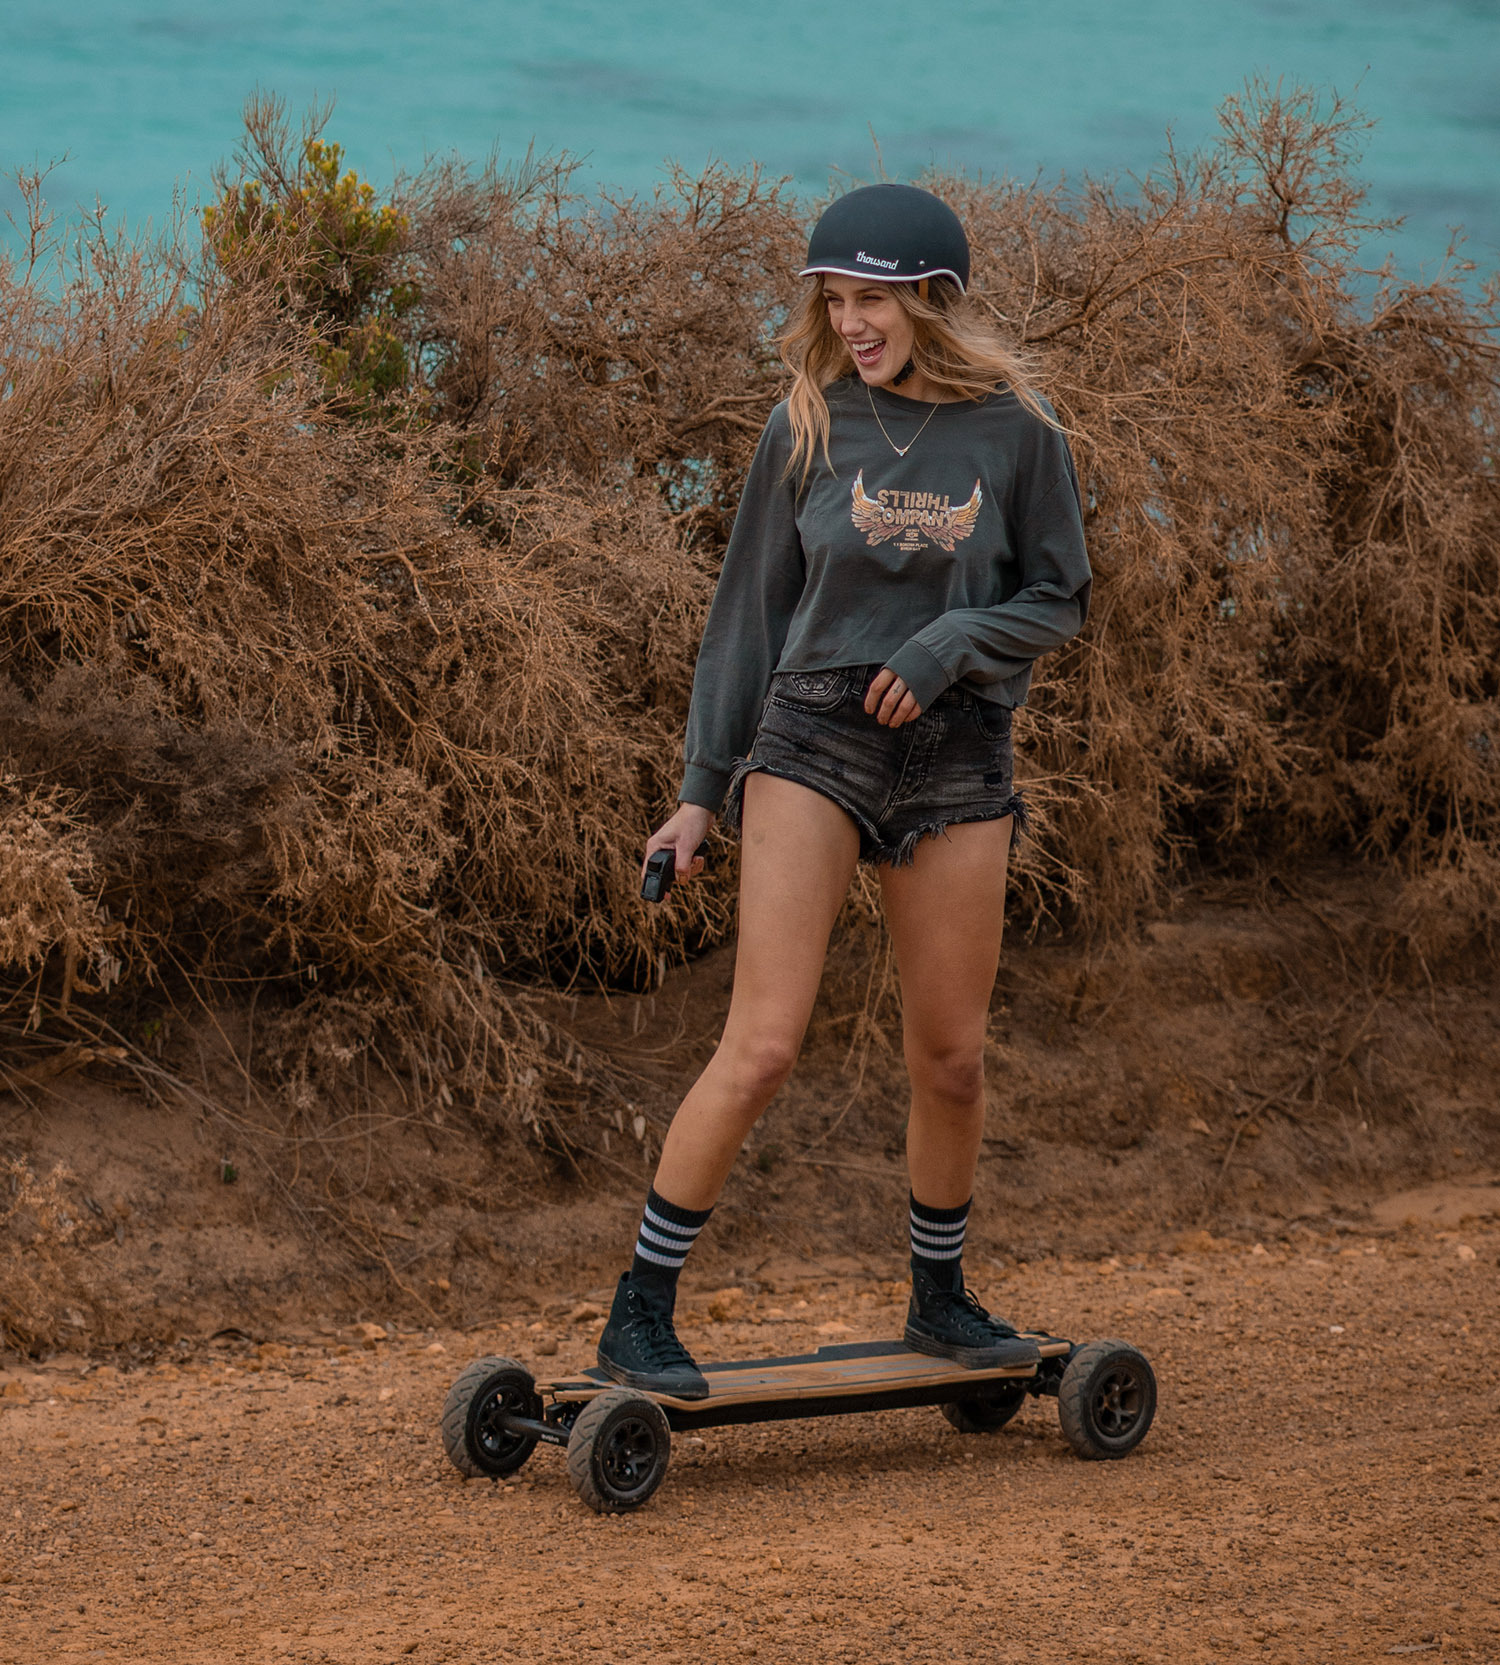 Shop Electric Skateboard Bamboo Online | Evolve USA